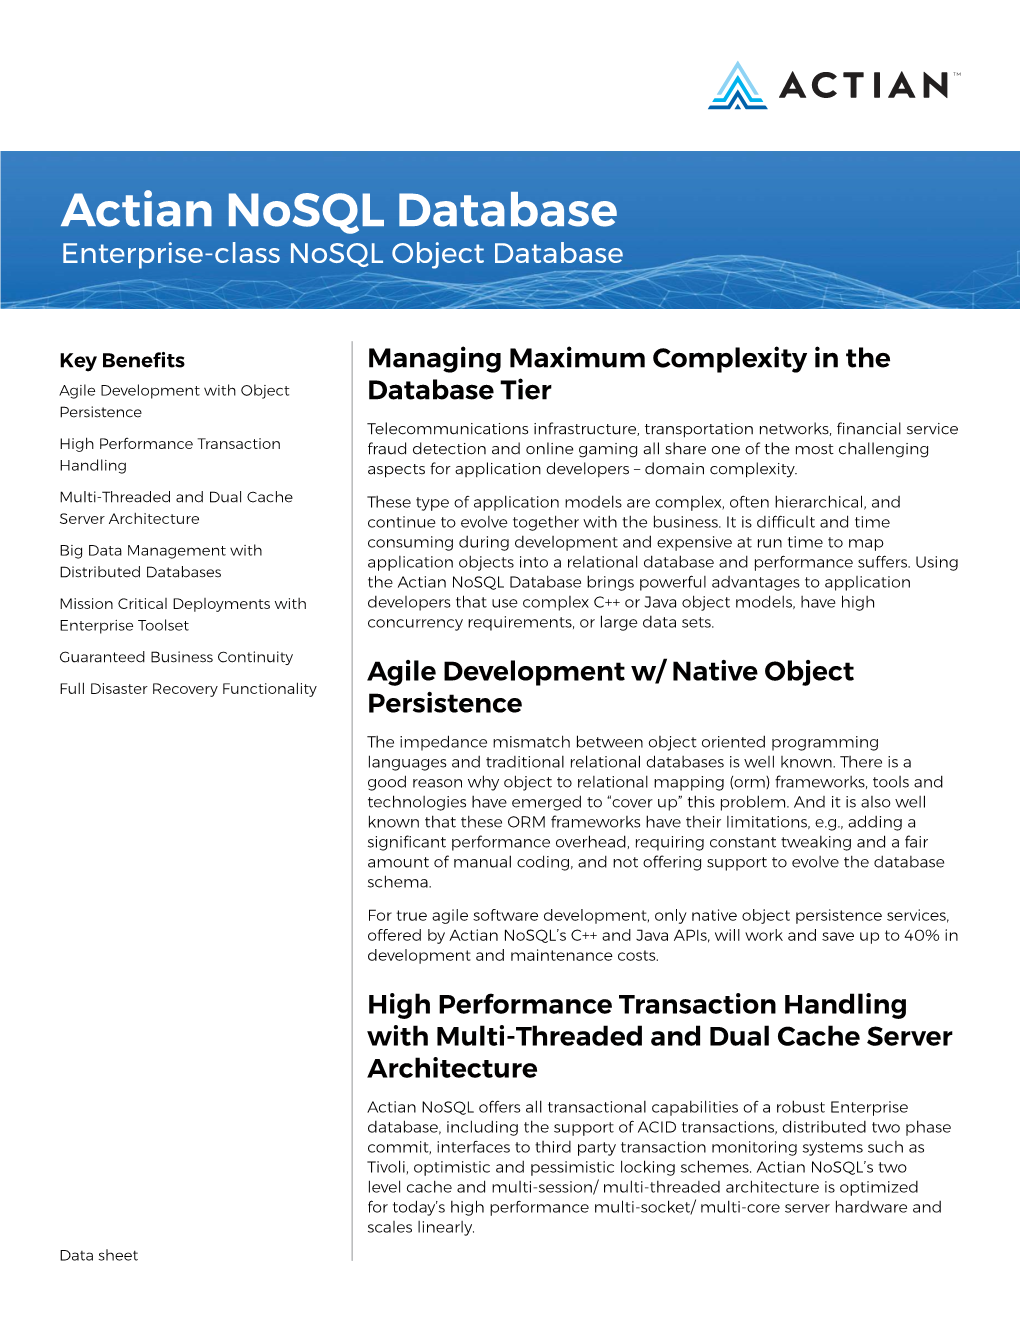 Actian Nosql Database Enterprise-Class Nosql Object Database